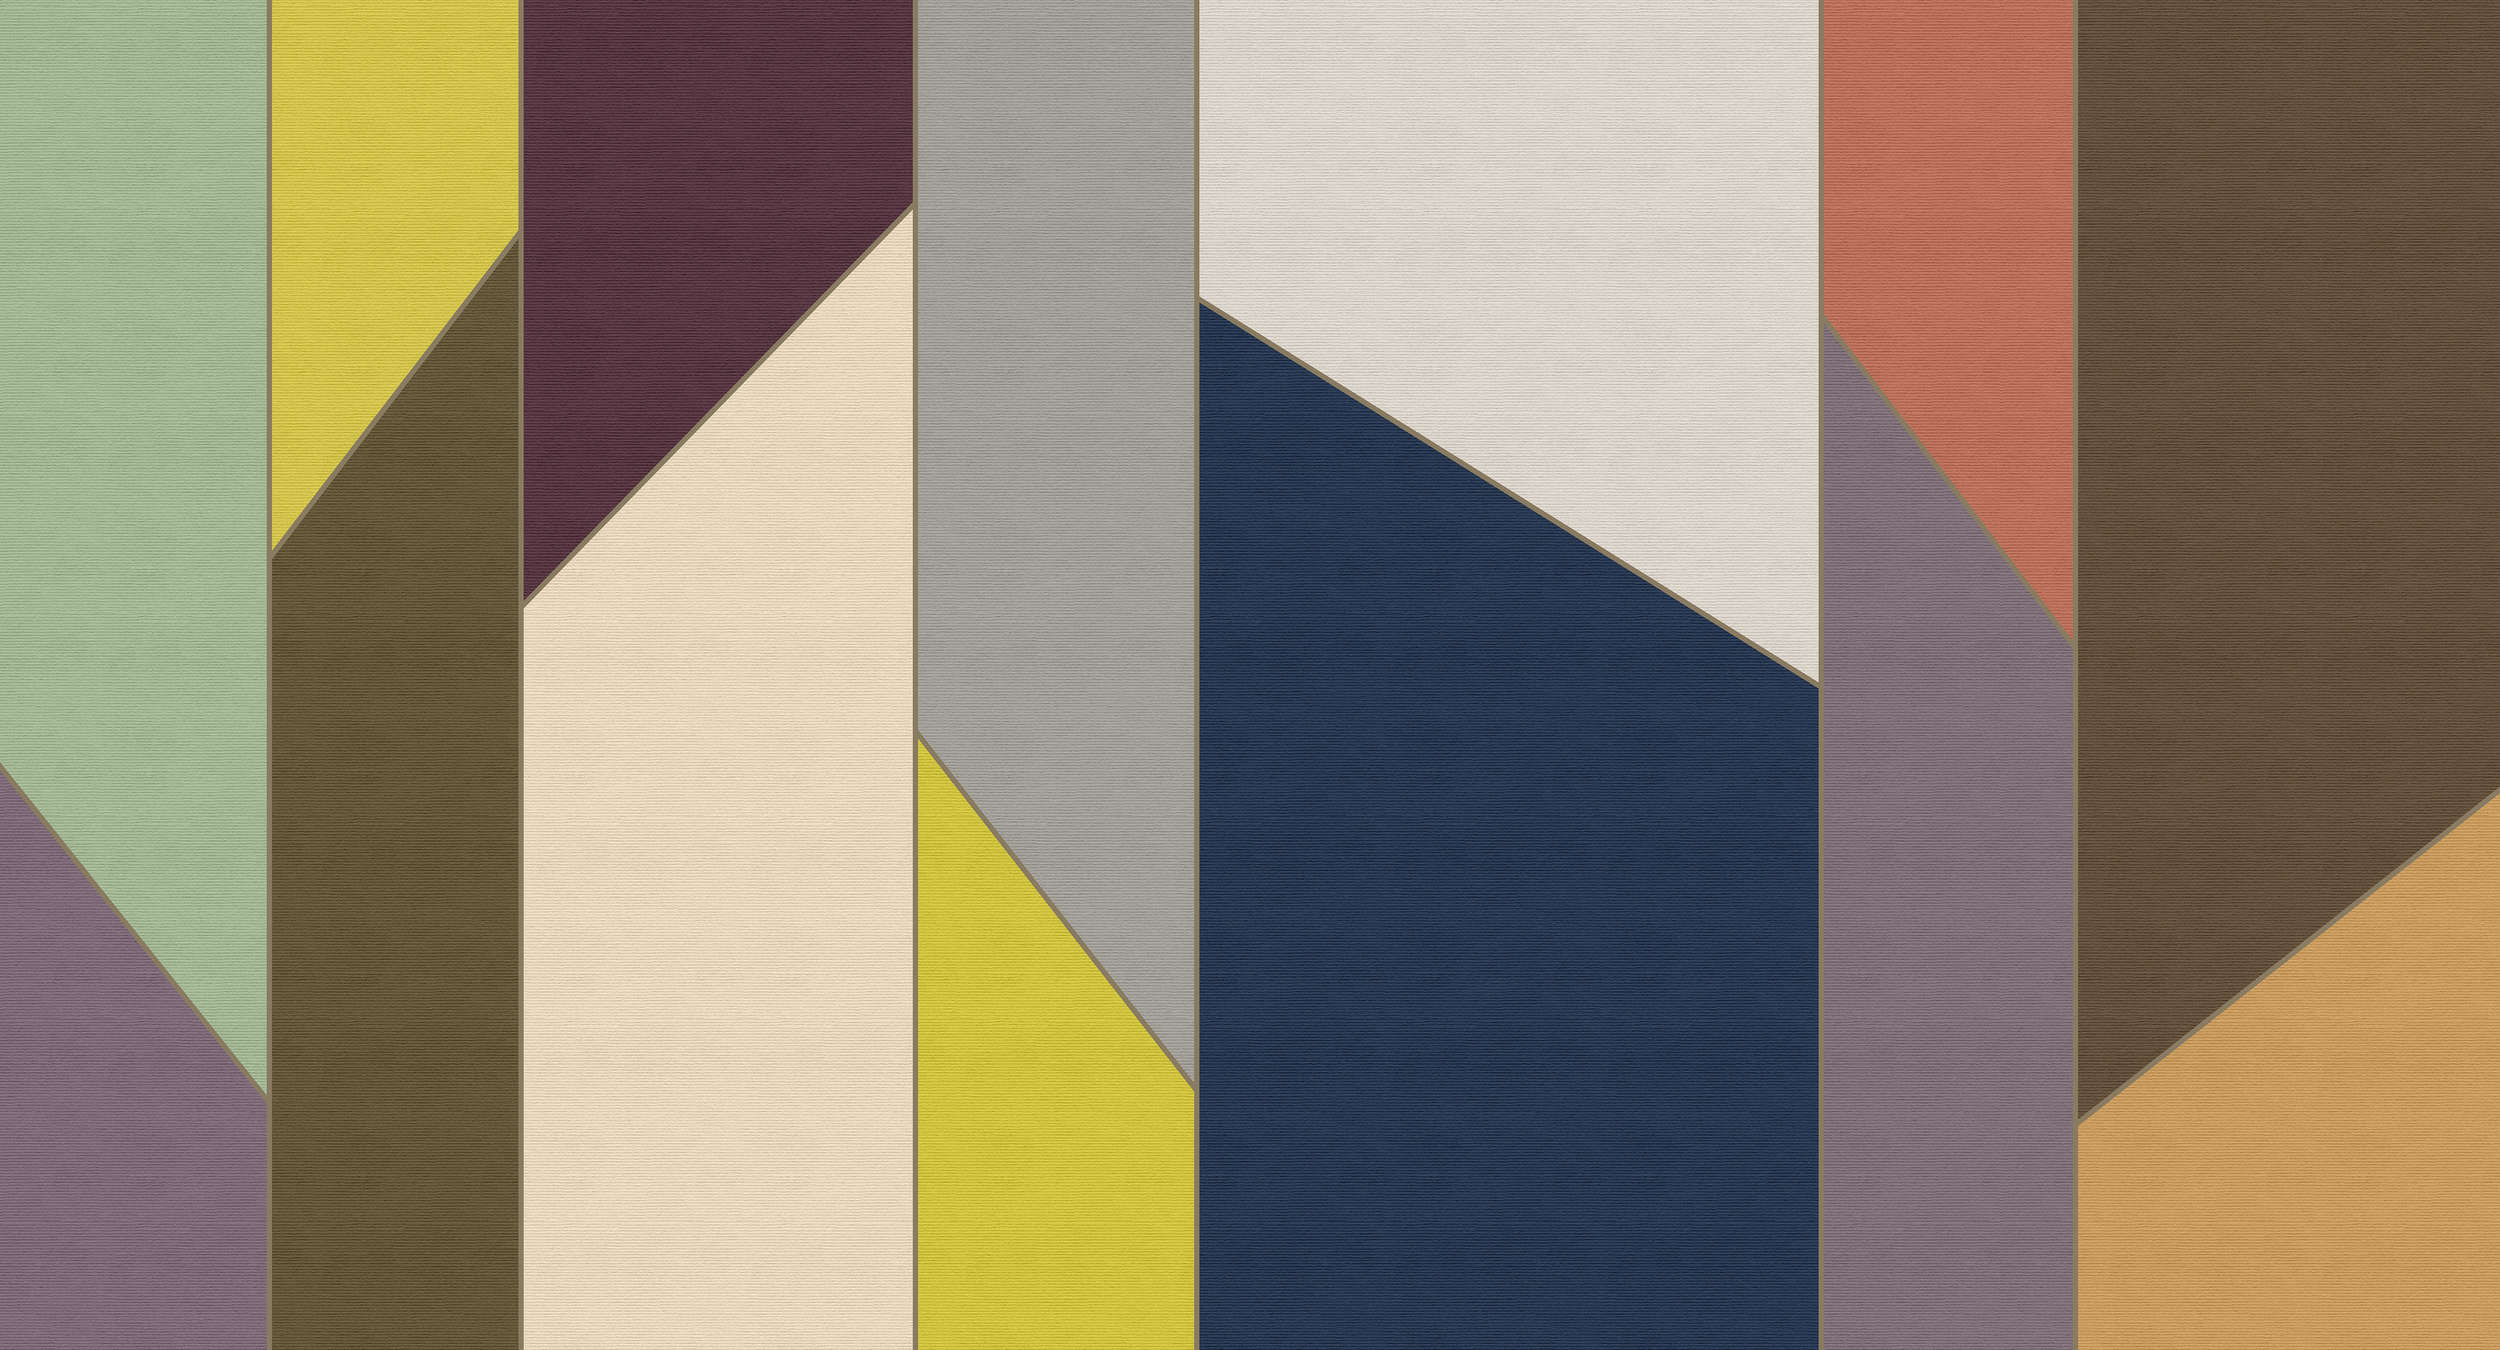             Geometry 4 - Stripe wallpaper colourful retro design in ribbed structure - Beige, Blue | Matt smooth fleece
        